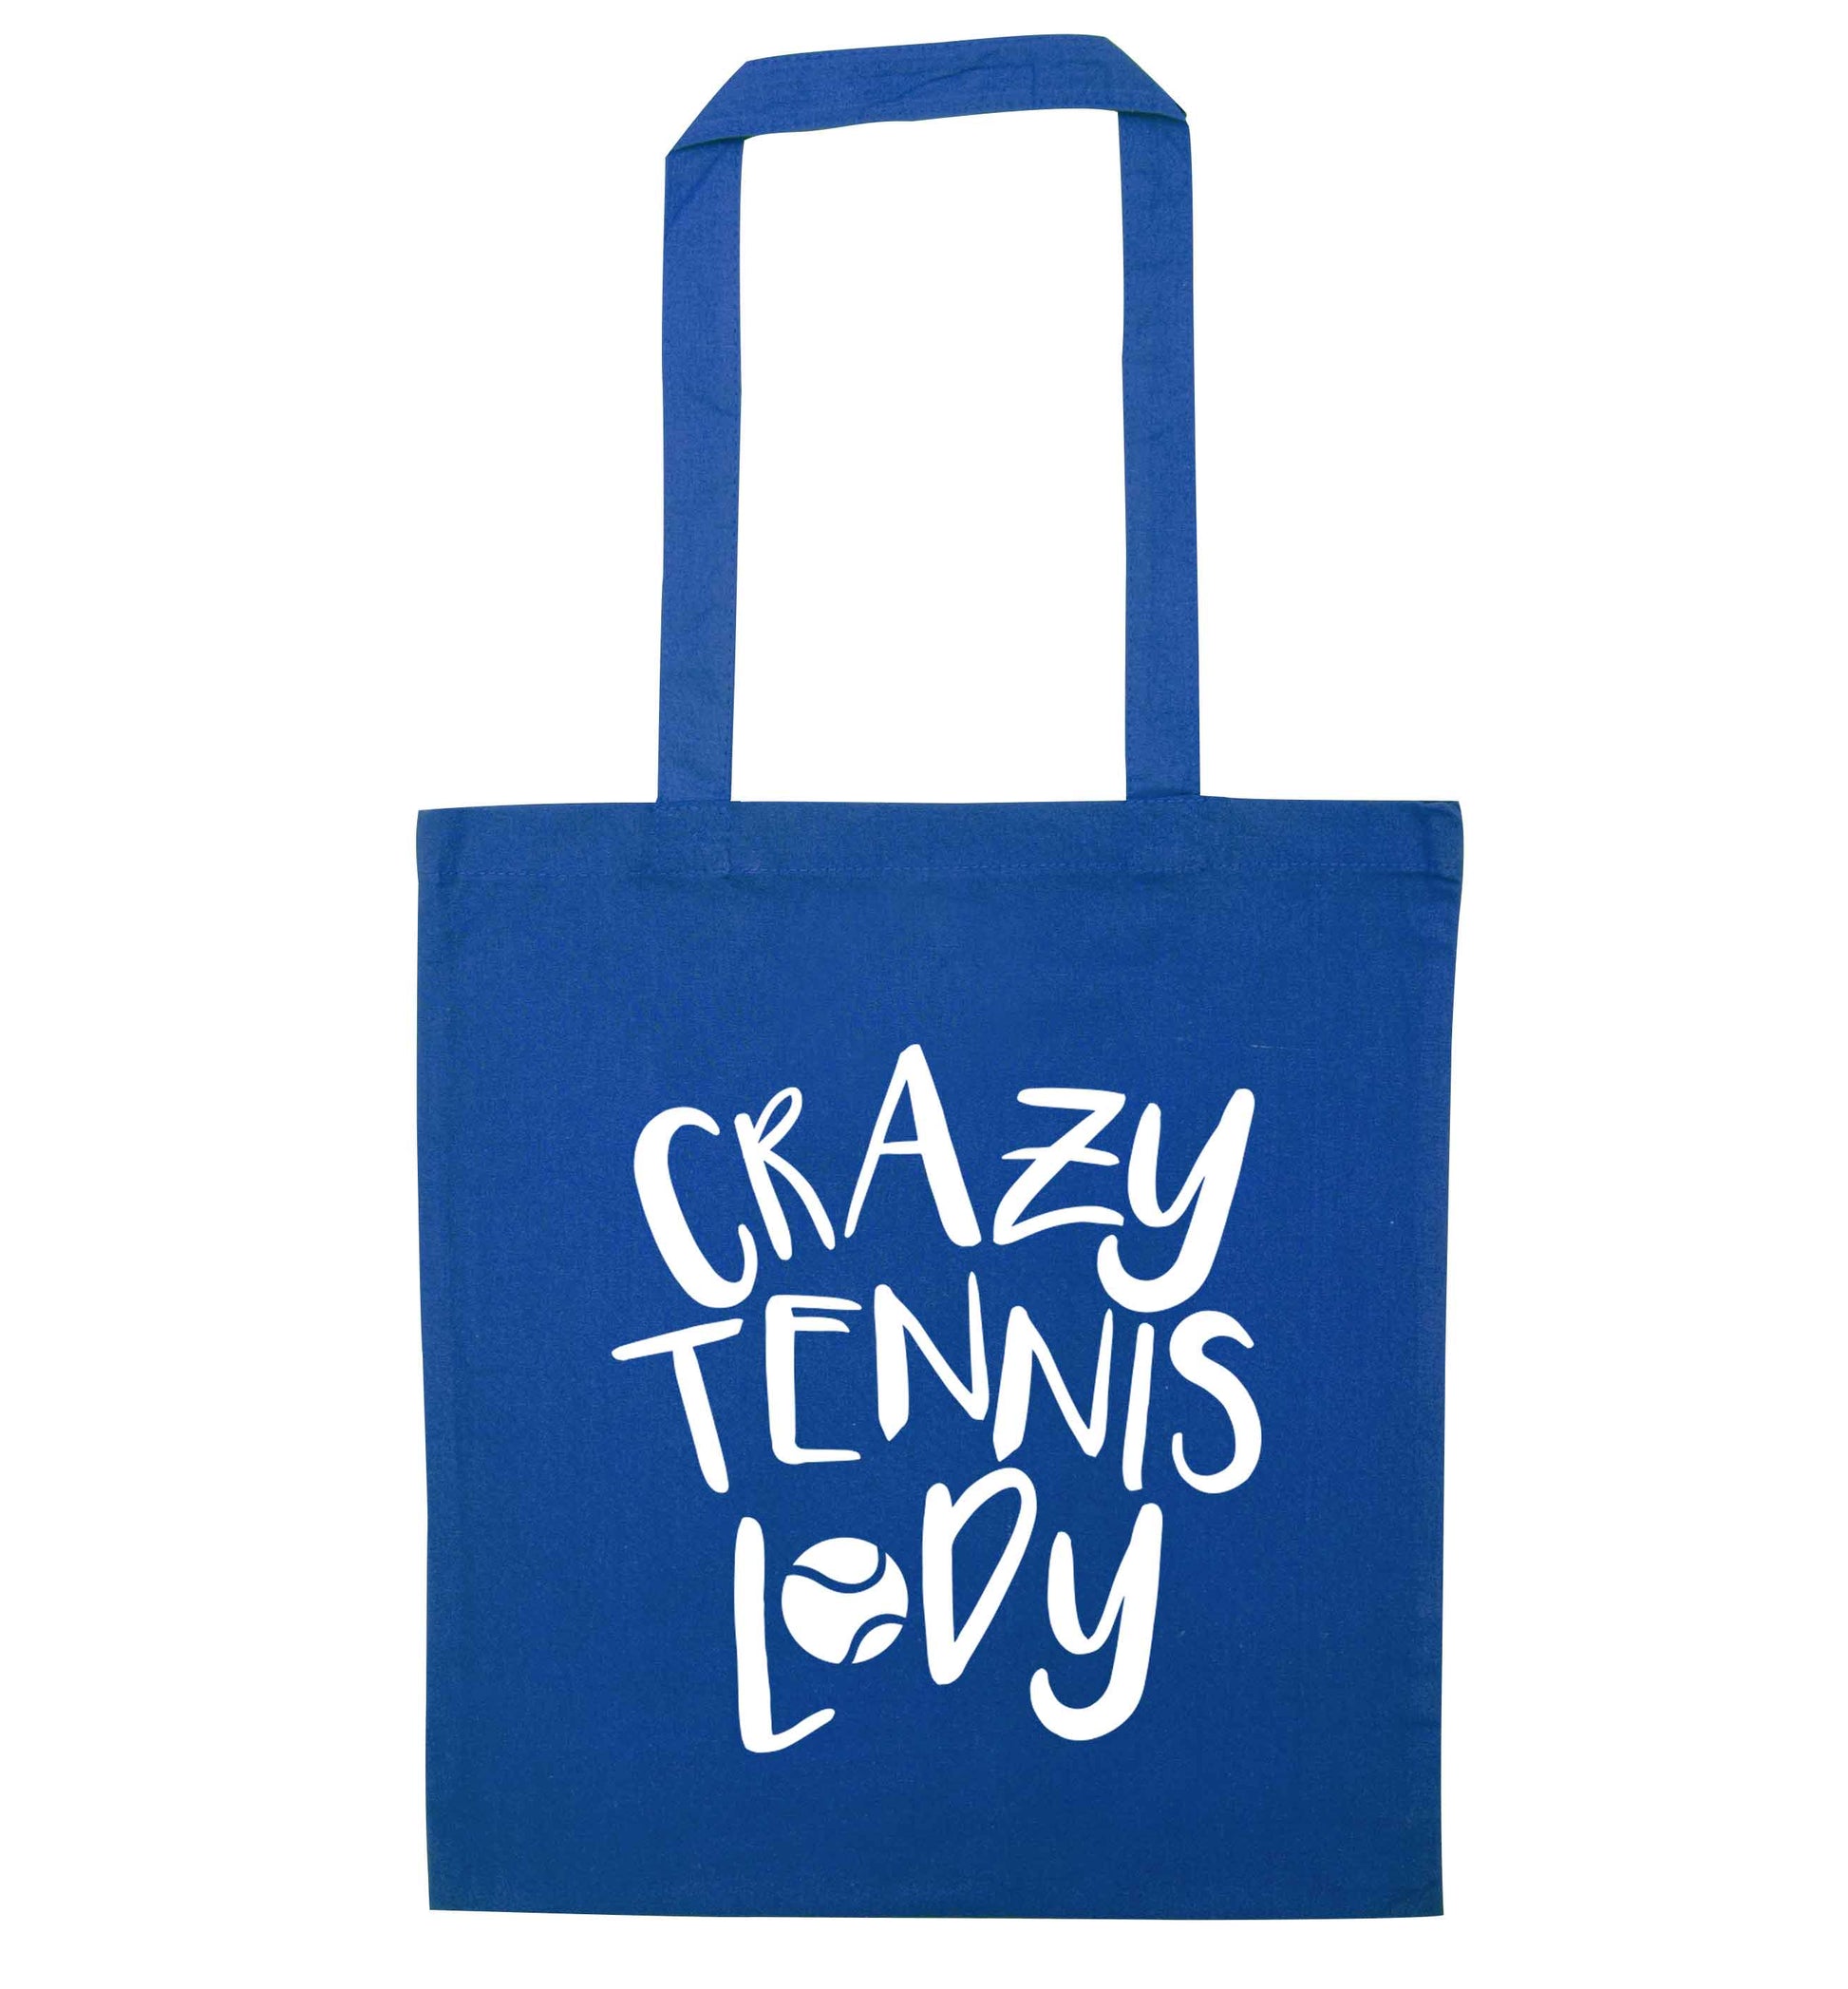 Crazy tennis lady blue tote bag